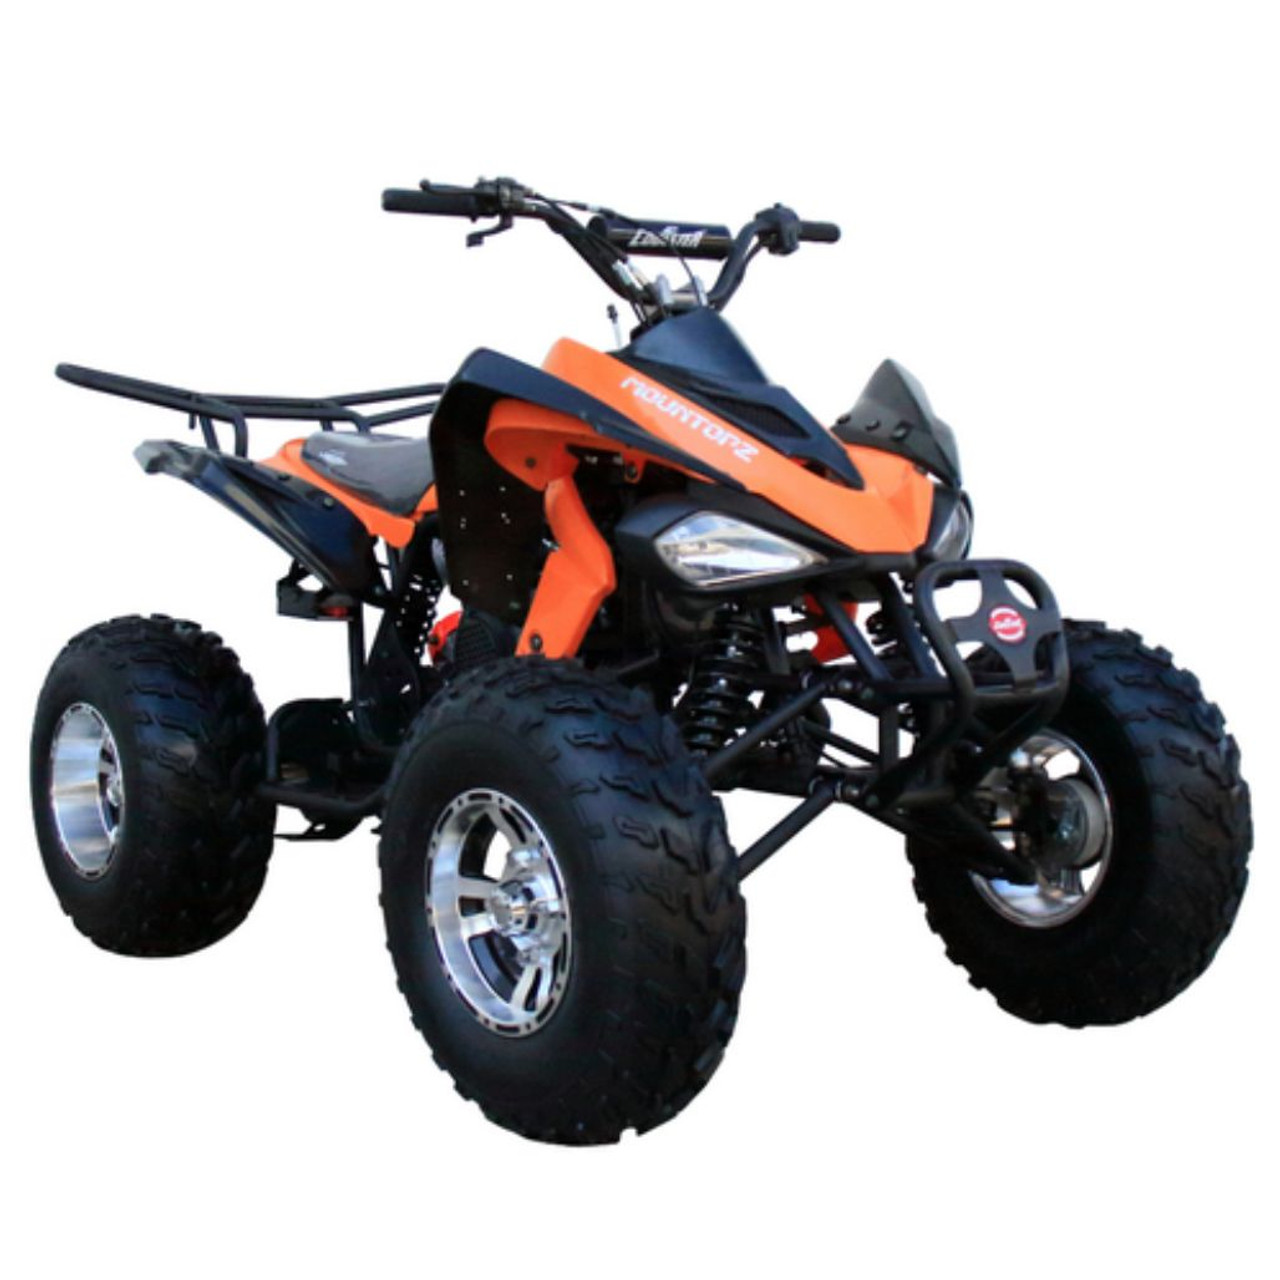 Coolster 3200S 200cc Sport ATV (TM-3200S)